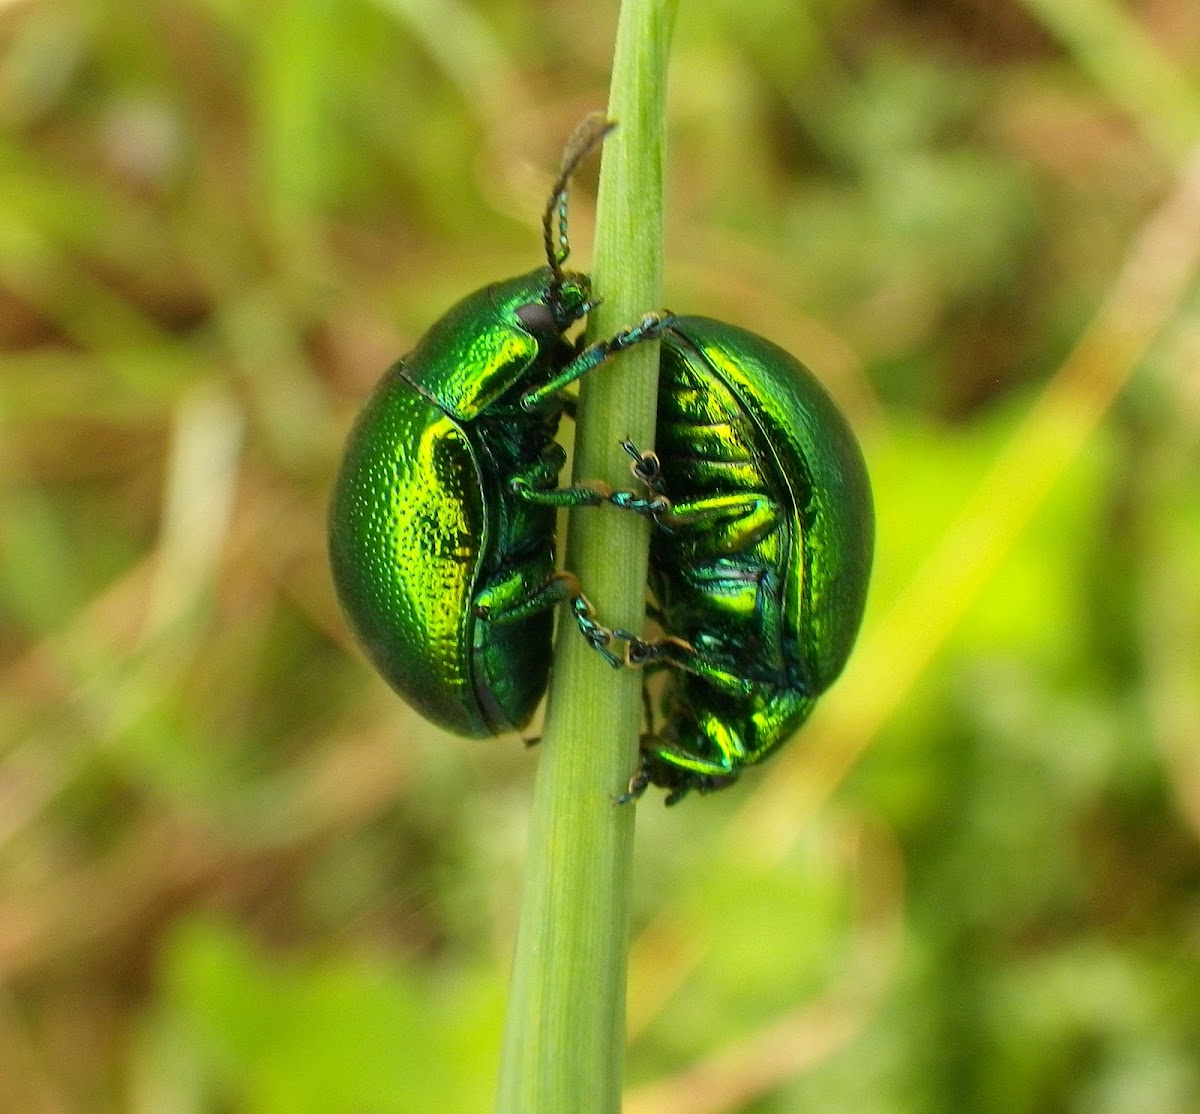 Mint leaf beetle